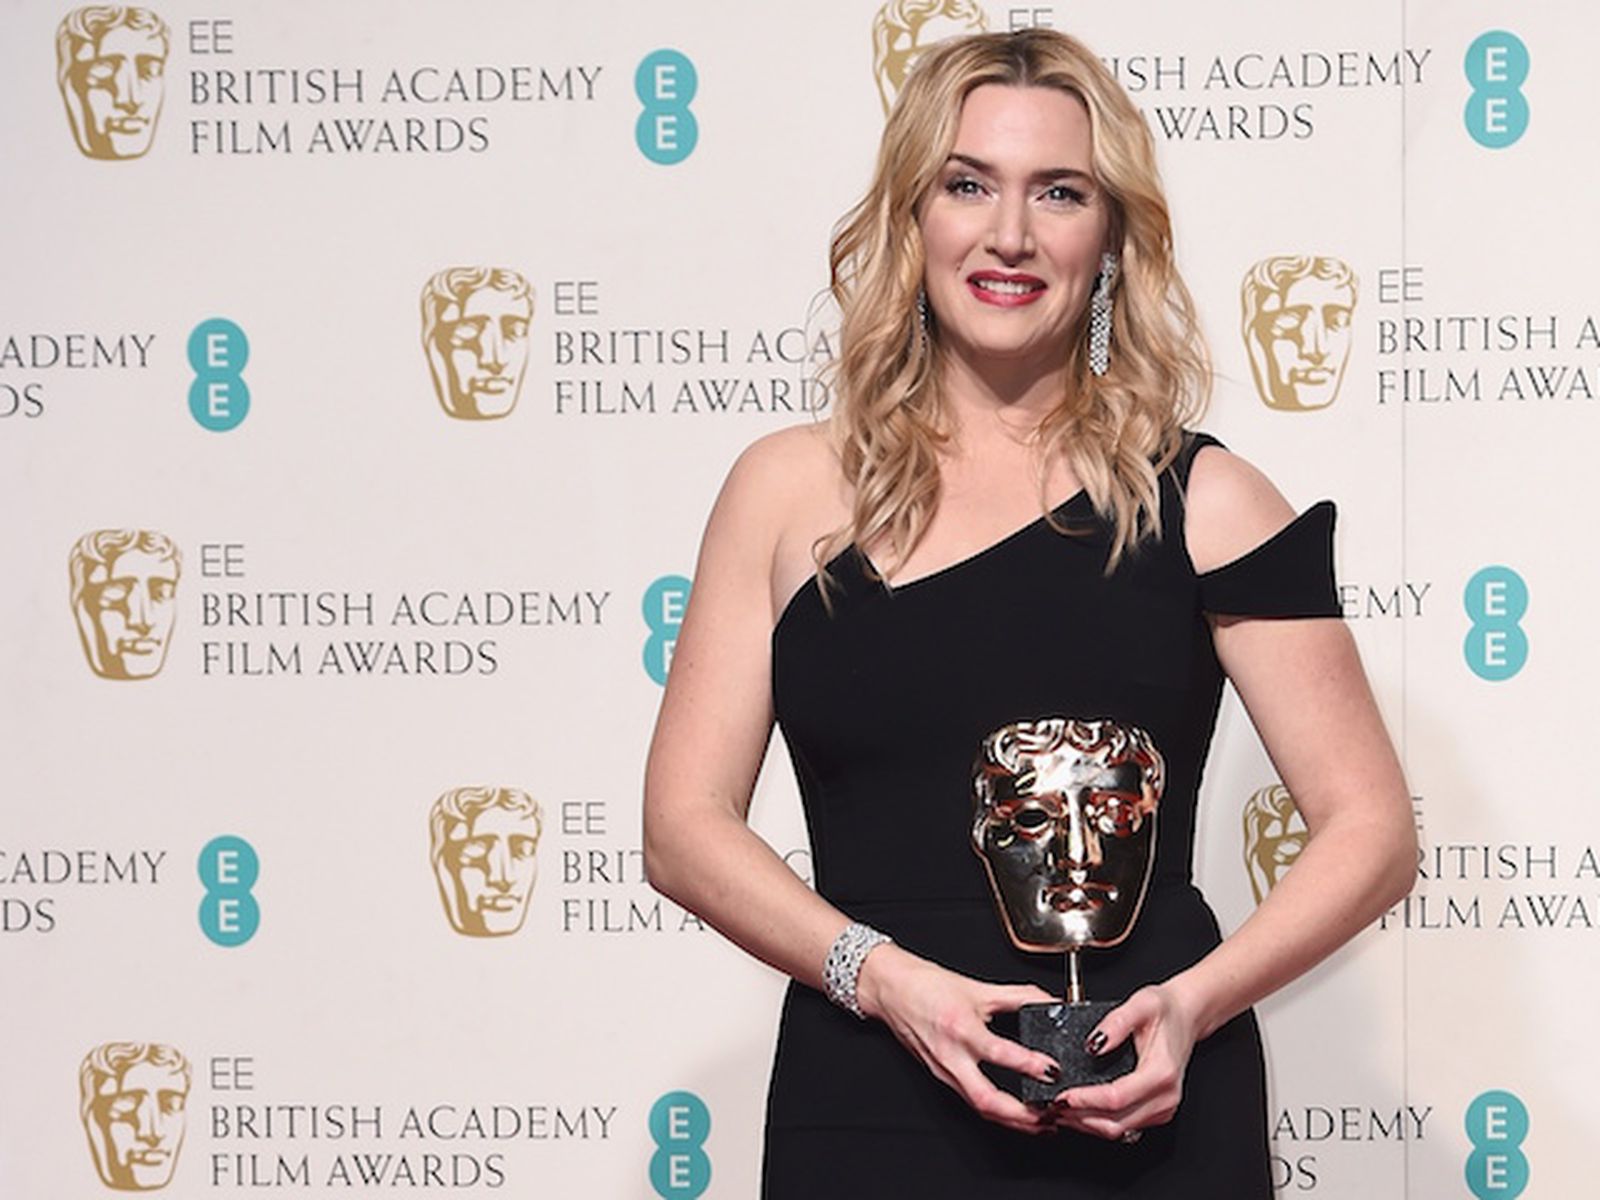 Jobs' Award Wins Winslet at BAFTA Ceremony - MacRumors